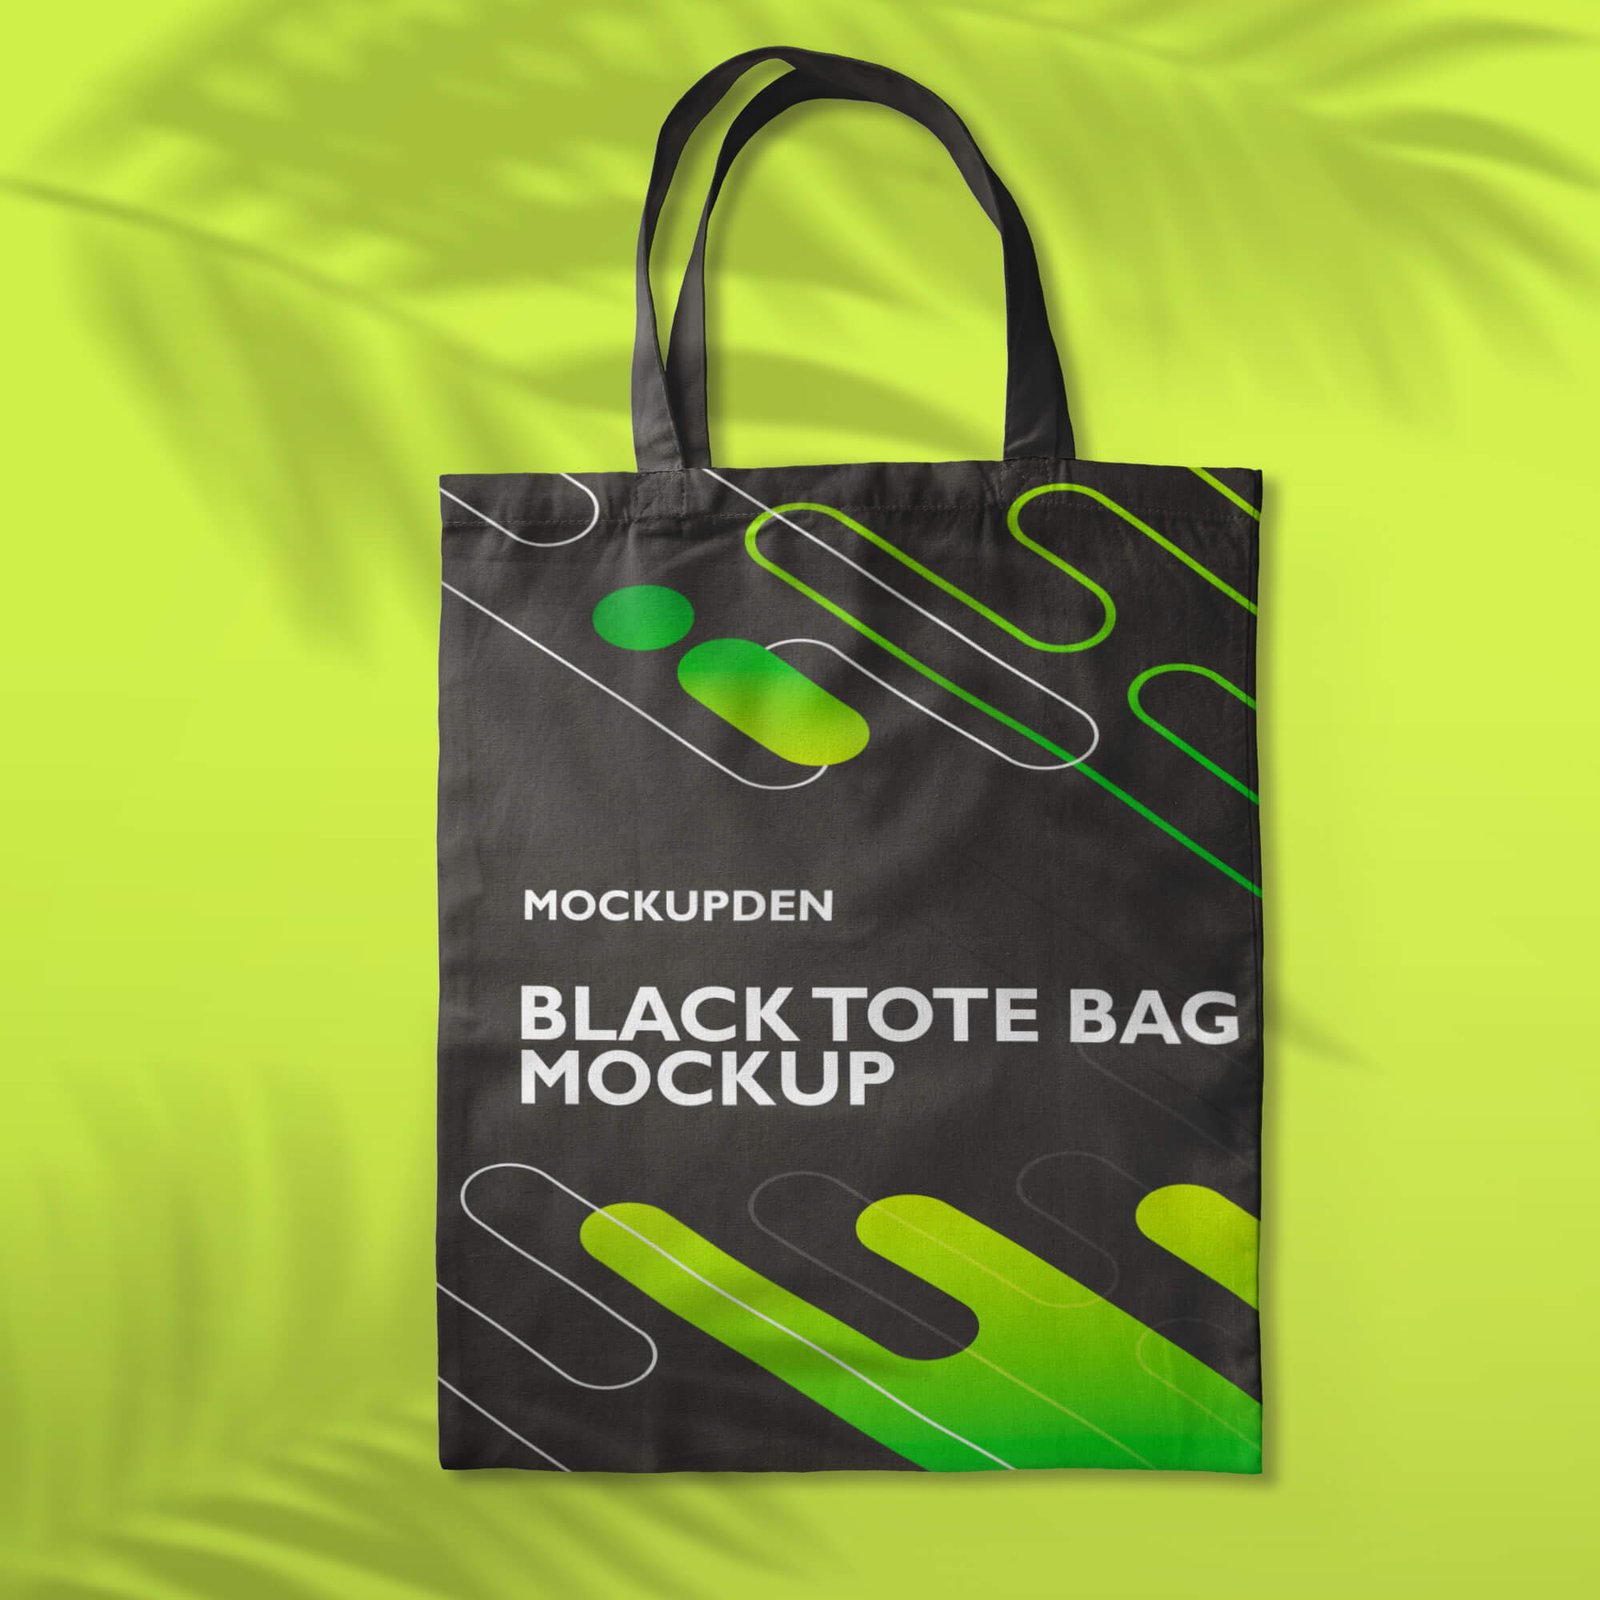 Design Free Black Tote Bag Mockup PSD Template